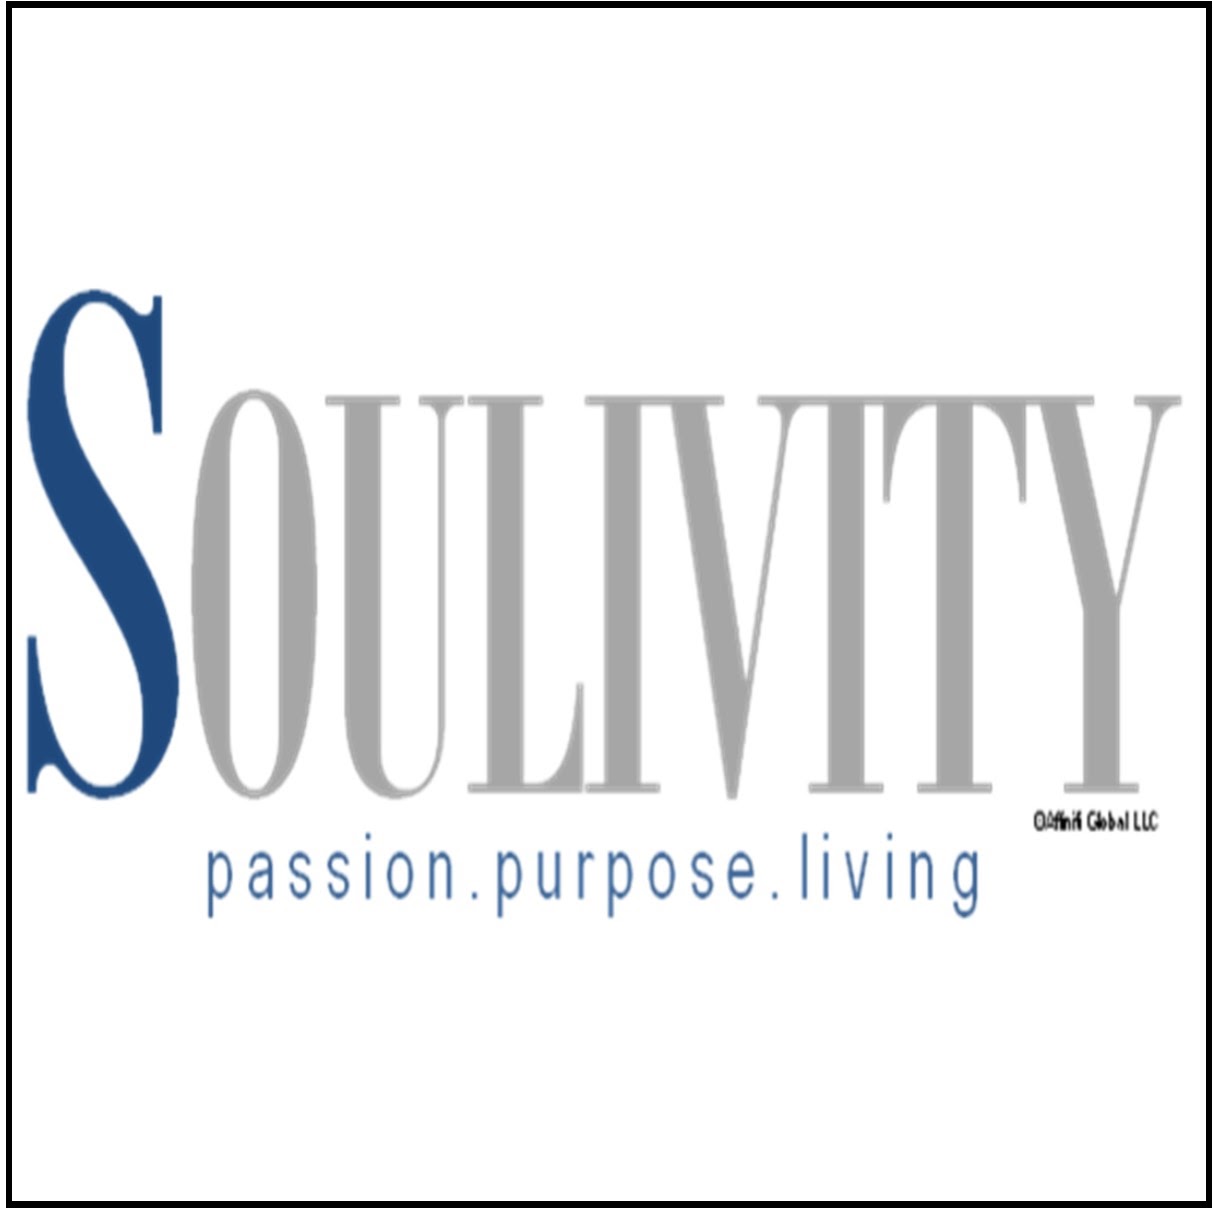 Soulivity Magazine